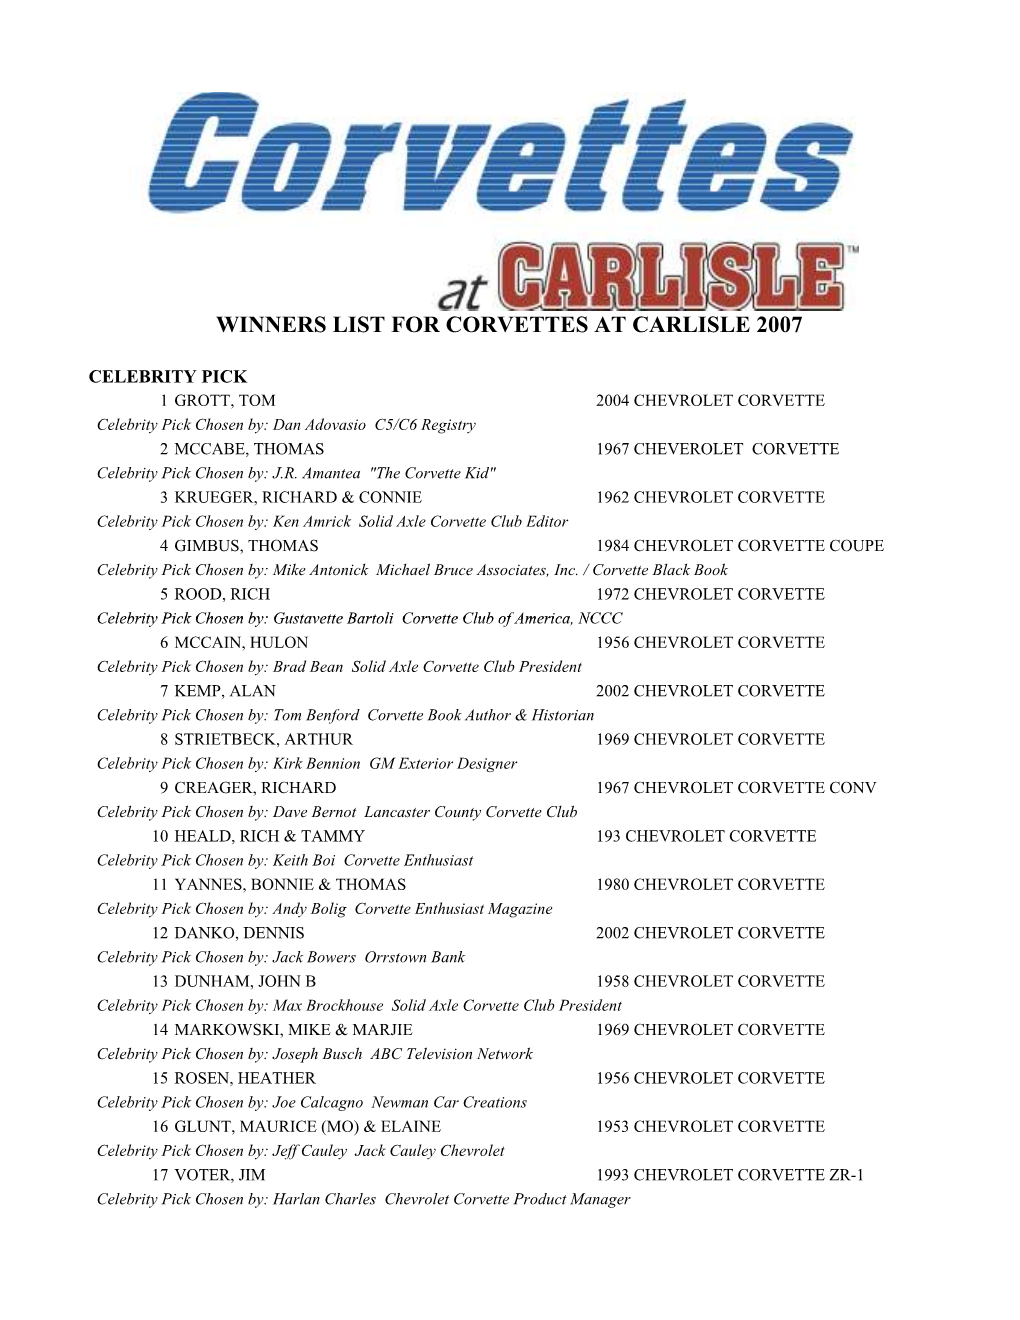 Wi Ers List for Corvettes at Carlisle 2007